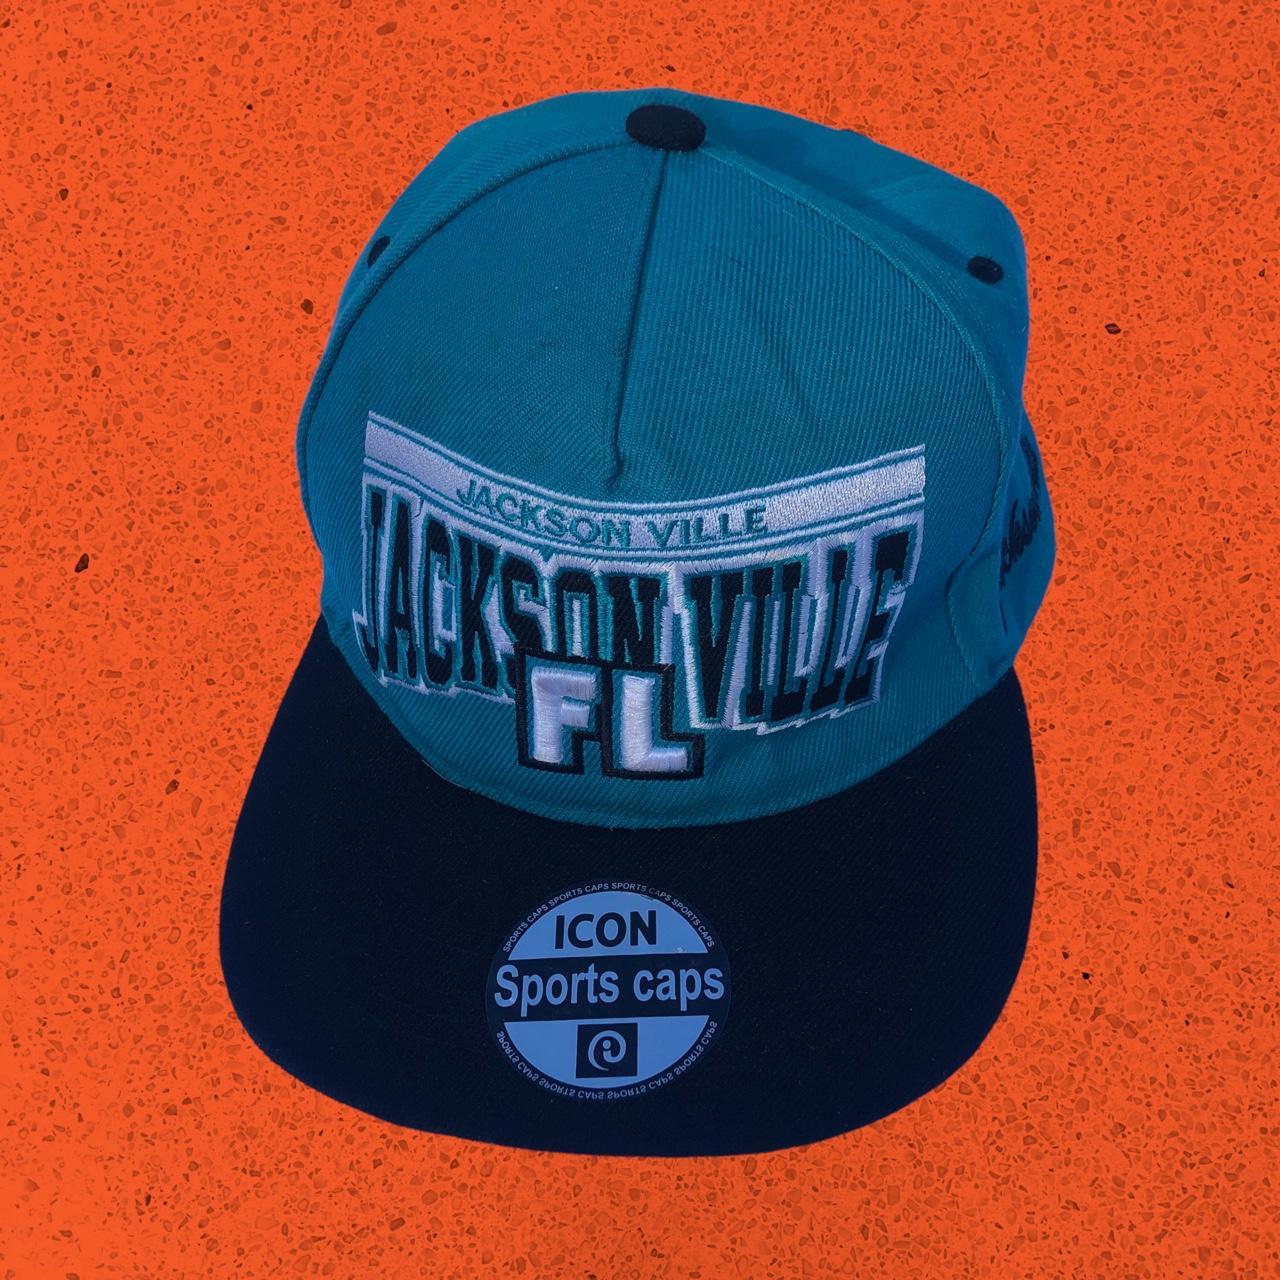 Product Image 2 - Teal blue #Jacksonville Florida hat